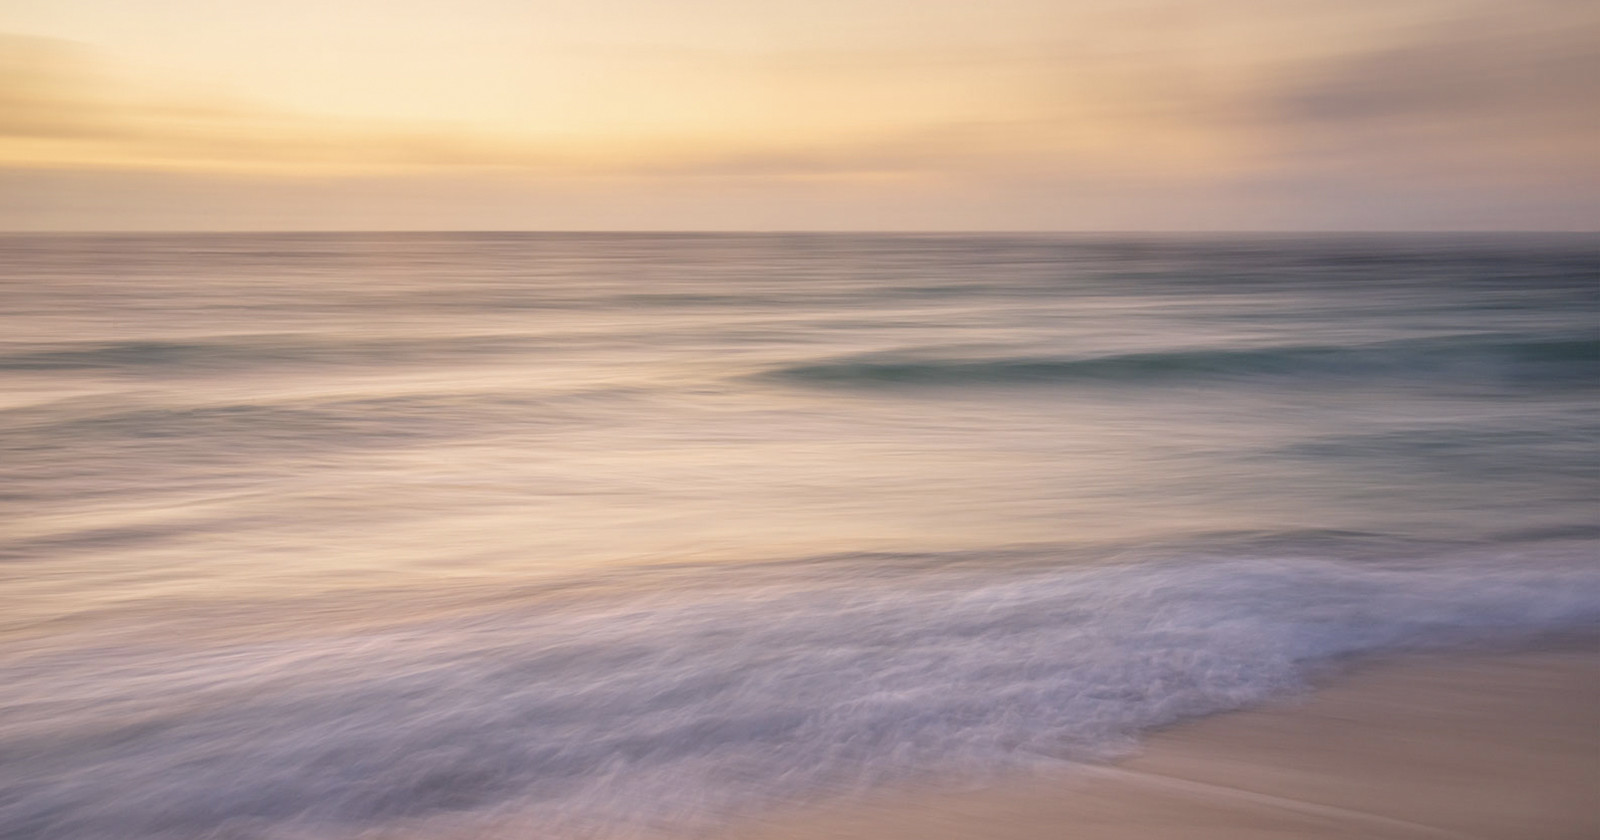  abstract photo series captures serenity ocean 